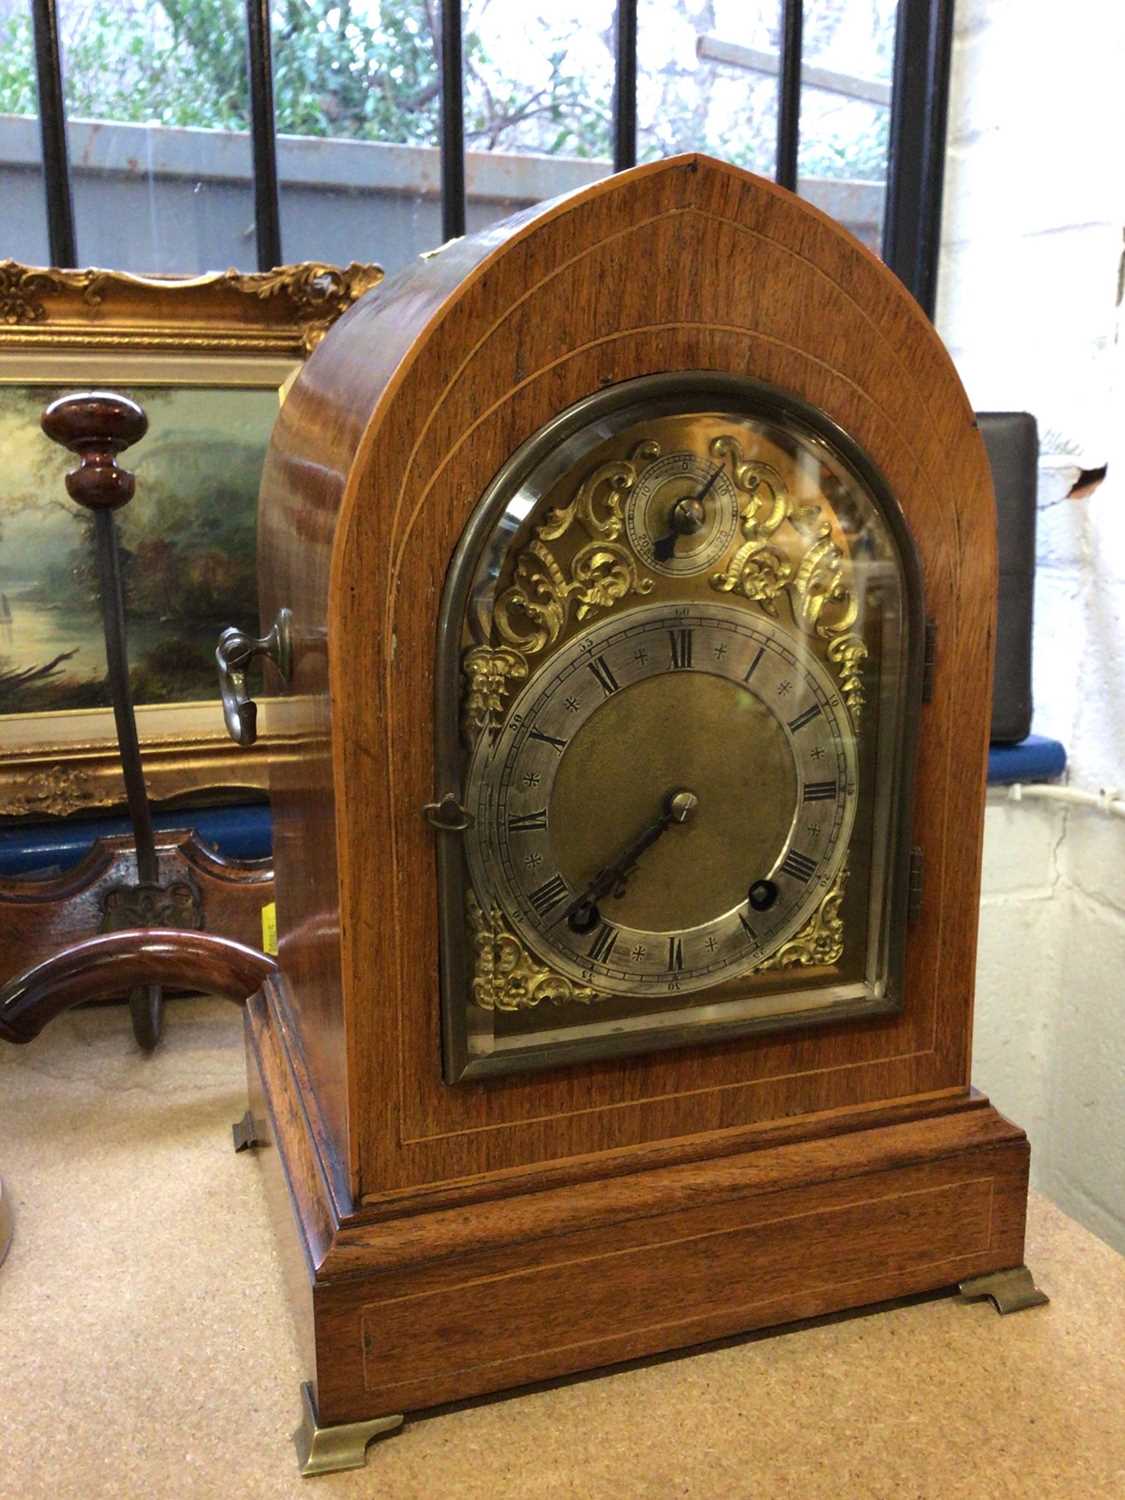 Lot 171 - Late 19th century 8 day bracket clock by Winterhalder & Hofmeier with arched 
brass dial in lancet shape case